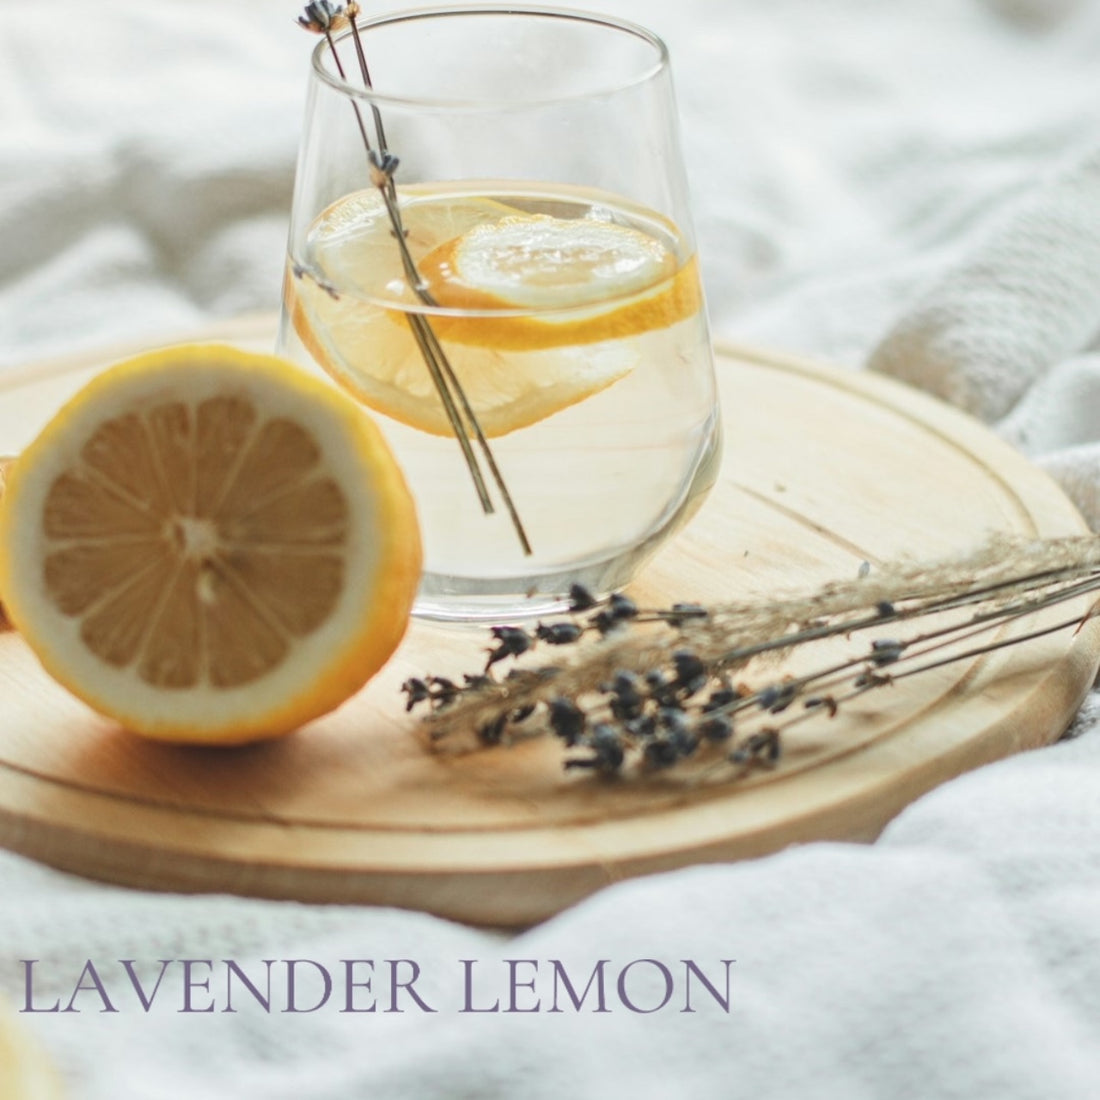 WHEN LIFE GIVES YOU LEMONS - 7 Different Lemon Perfume Scent Samples